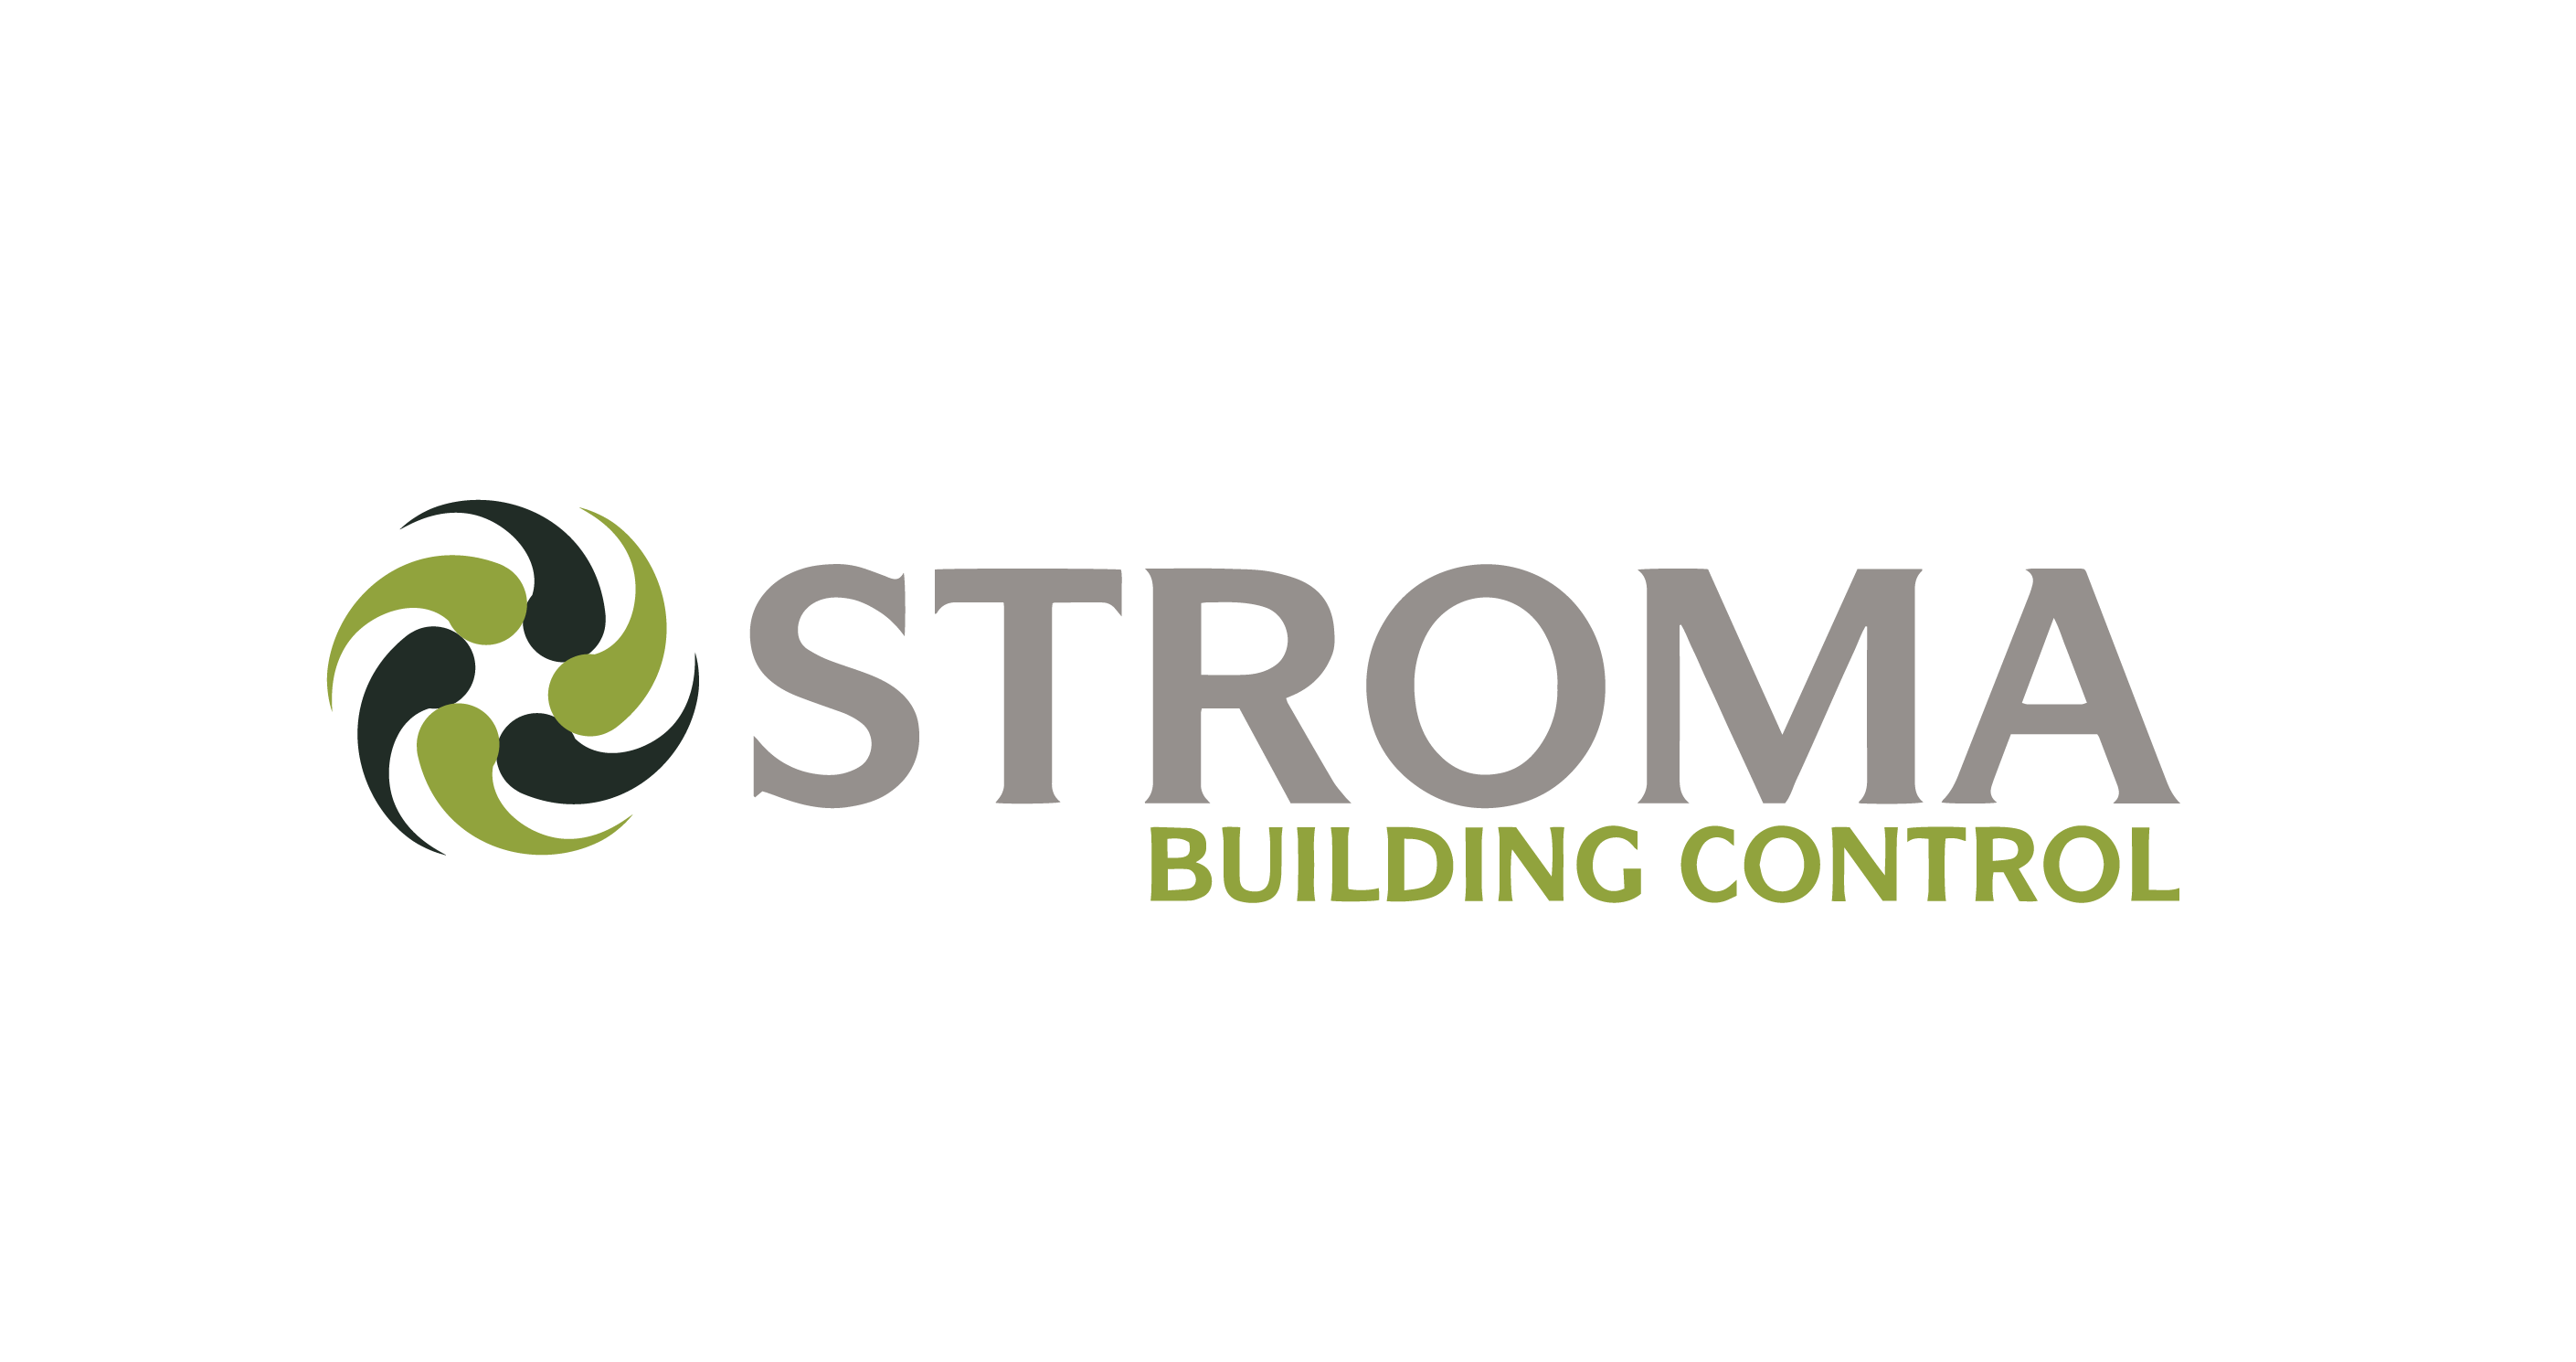 Stroma Certification